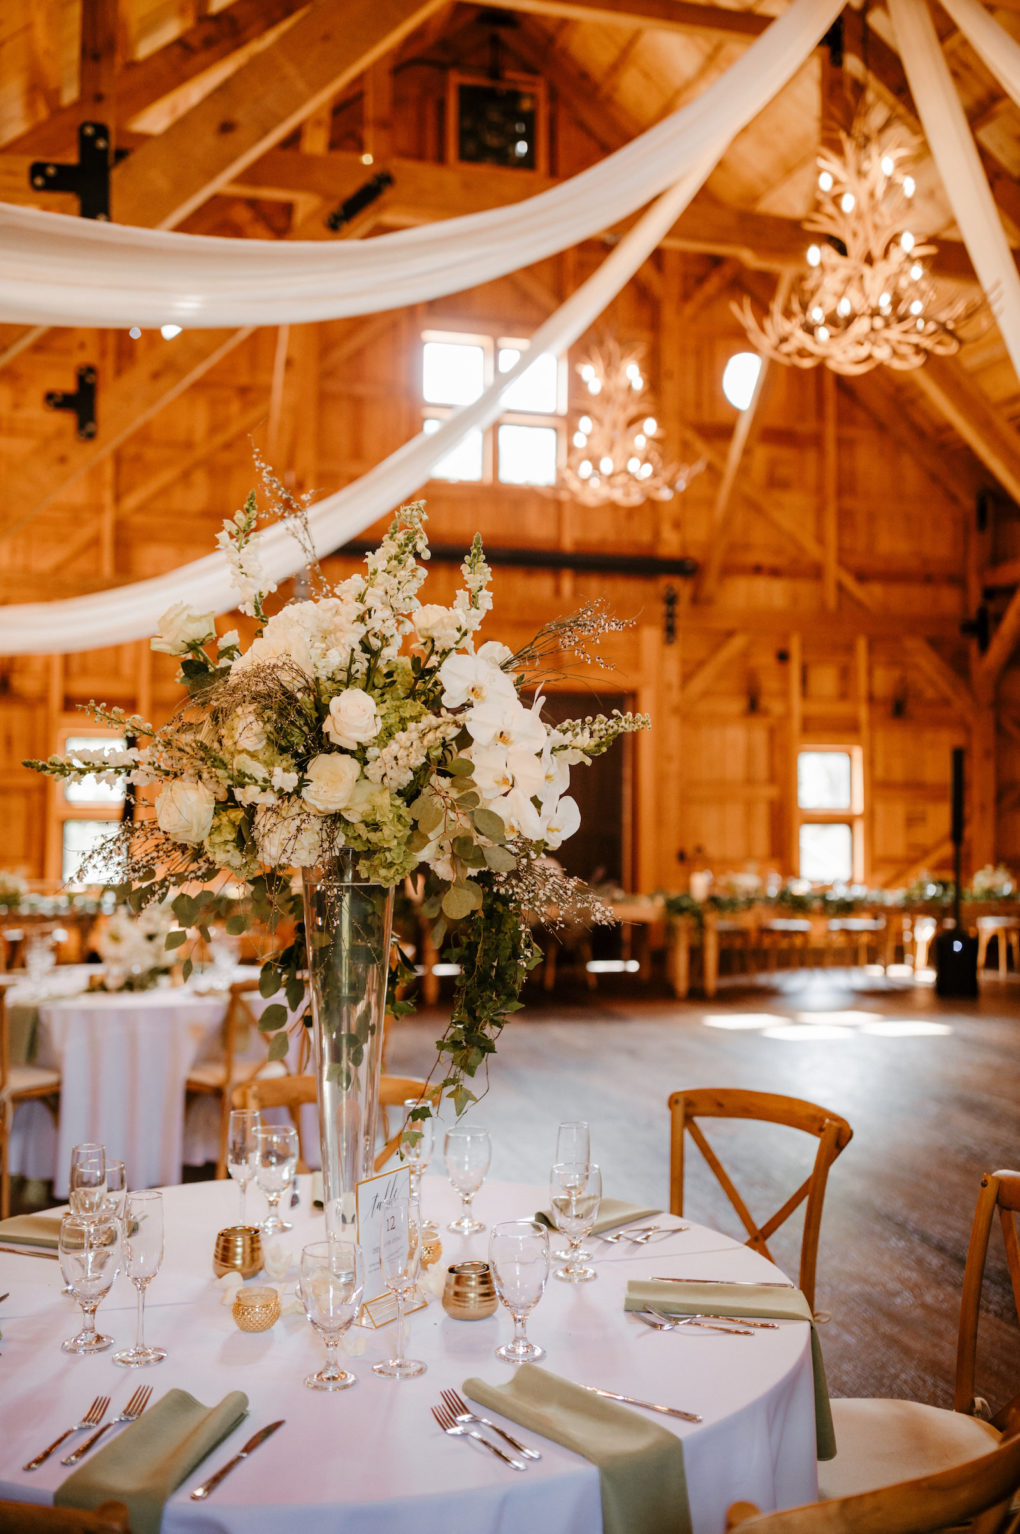 Florida Barn Wedding Reception with Rustic Décor and Tall Floral Centerpieces | Tampa Bay Wedding Reception Venue | Mision Lago Estate